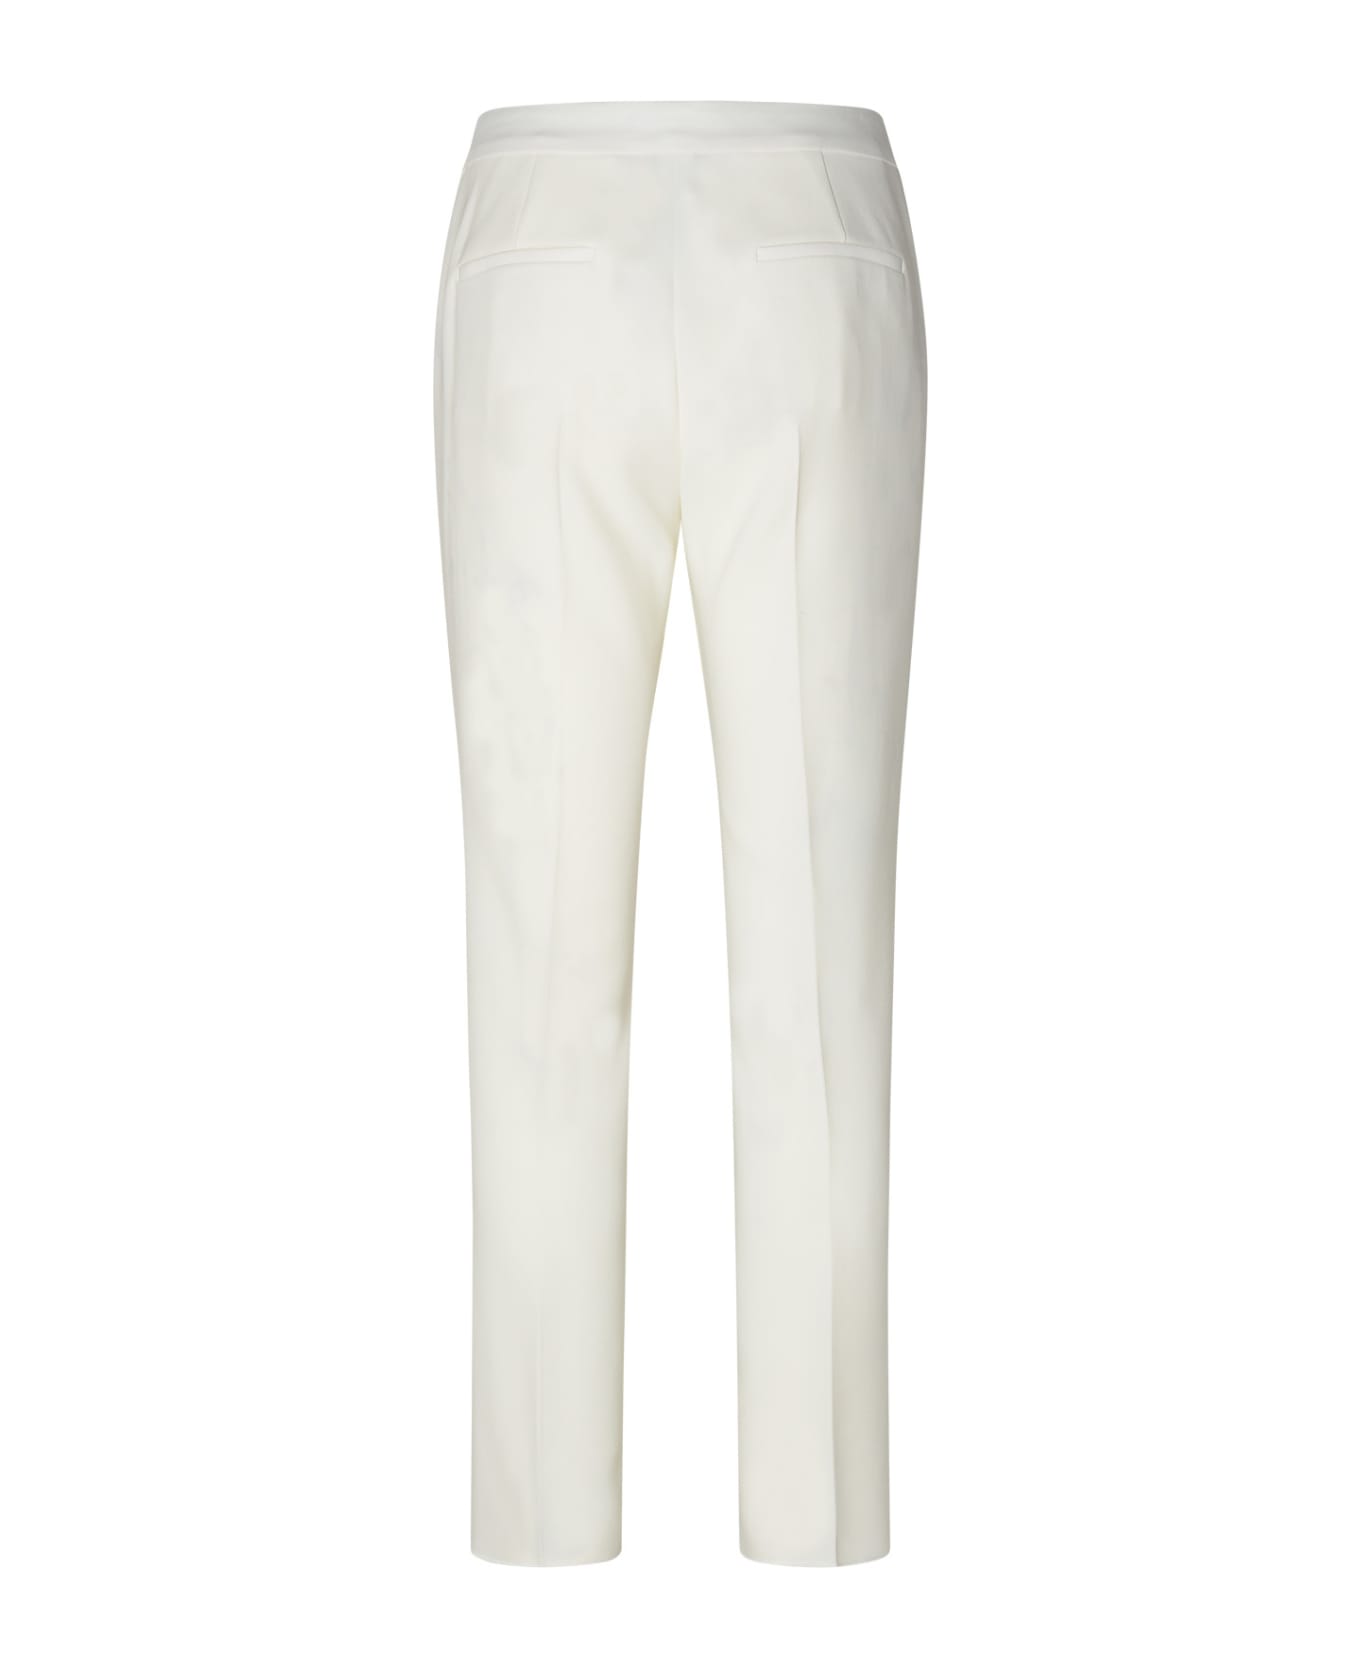 Max Mara White Triacetate Blend Trousers - White ボトムス